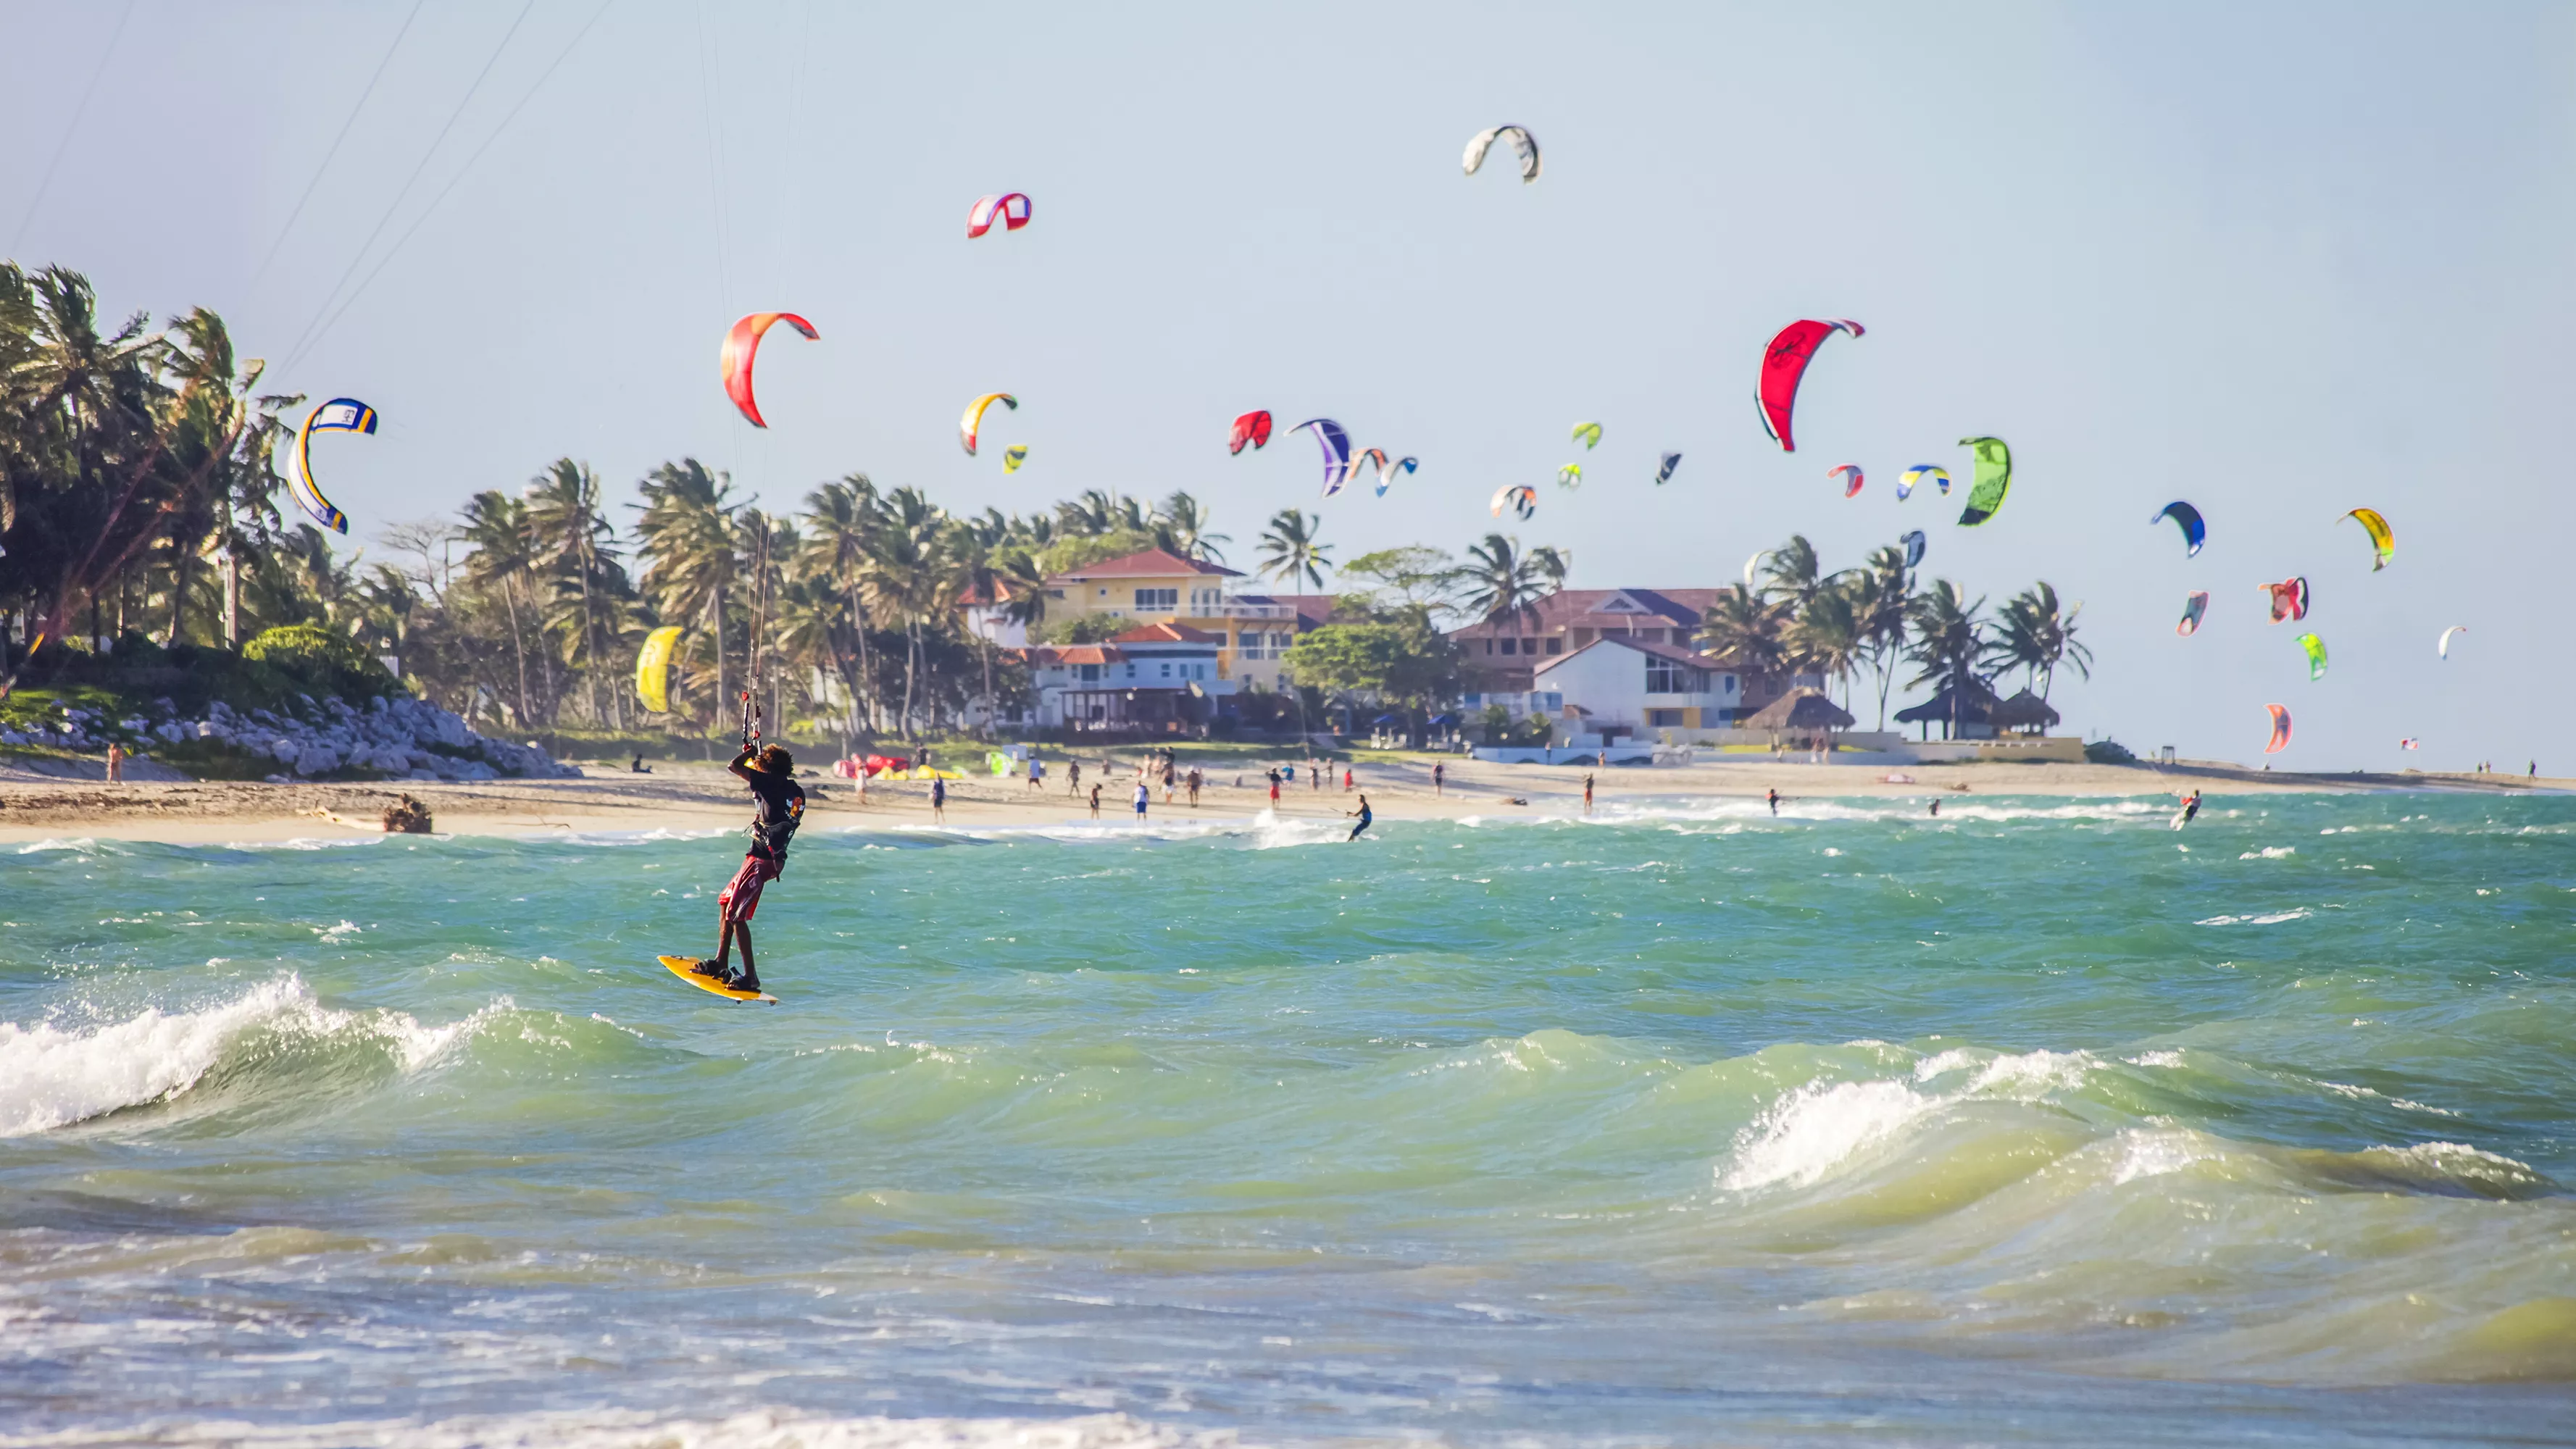 Kite Club Cabarete in Dominican Republic, Caribbean | Surfing,Kitesurfing - Rated 2.1